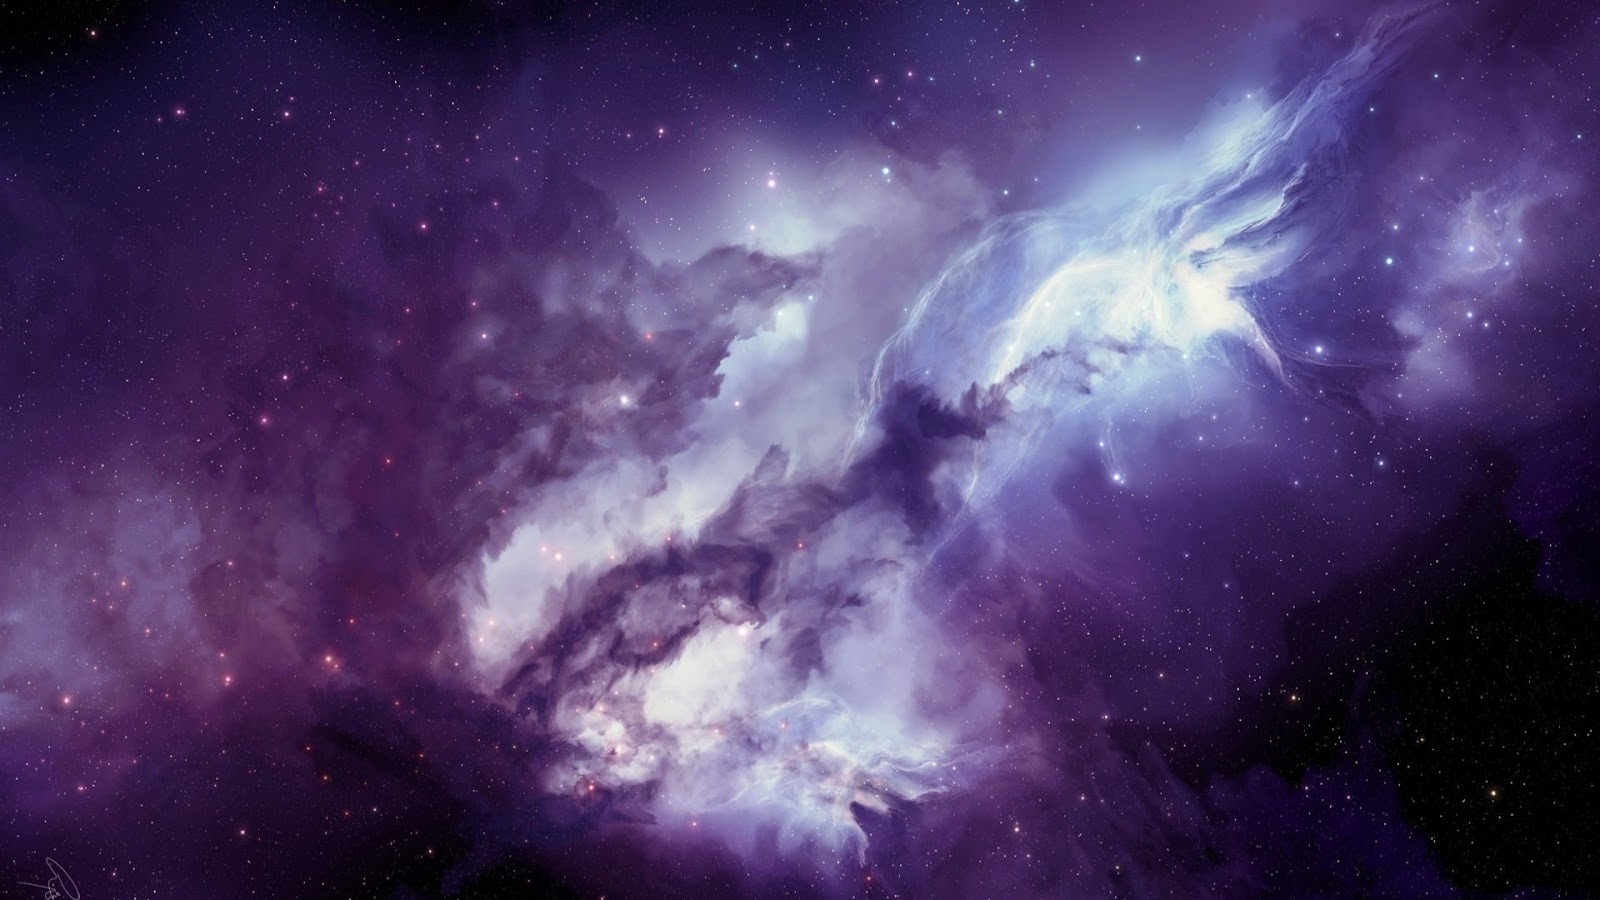 39+] Milky Way Galaxy Wallpaper HD - WallpaperSafari